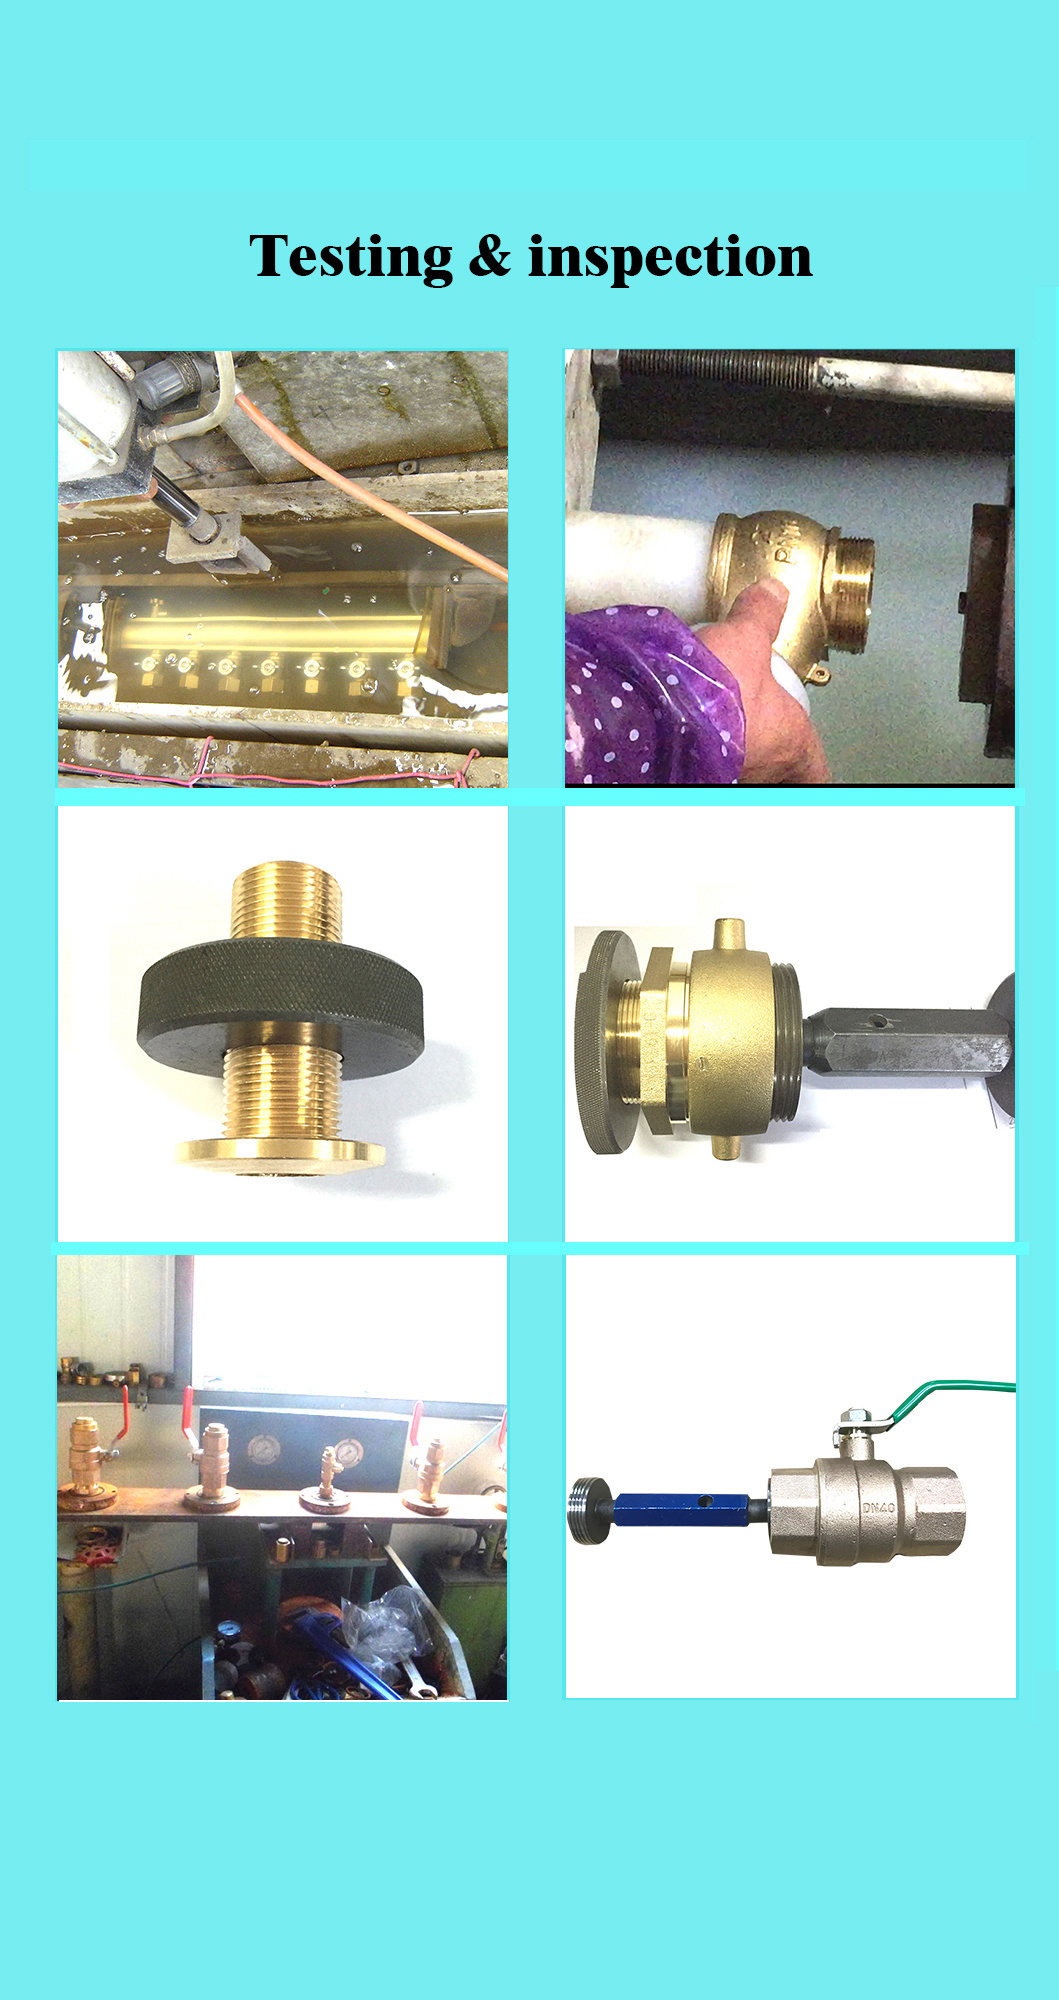 Brass Material 2-1/2" Hydrant Cap W/ Chain